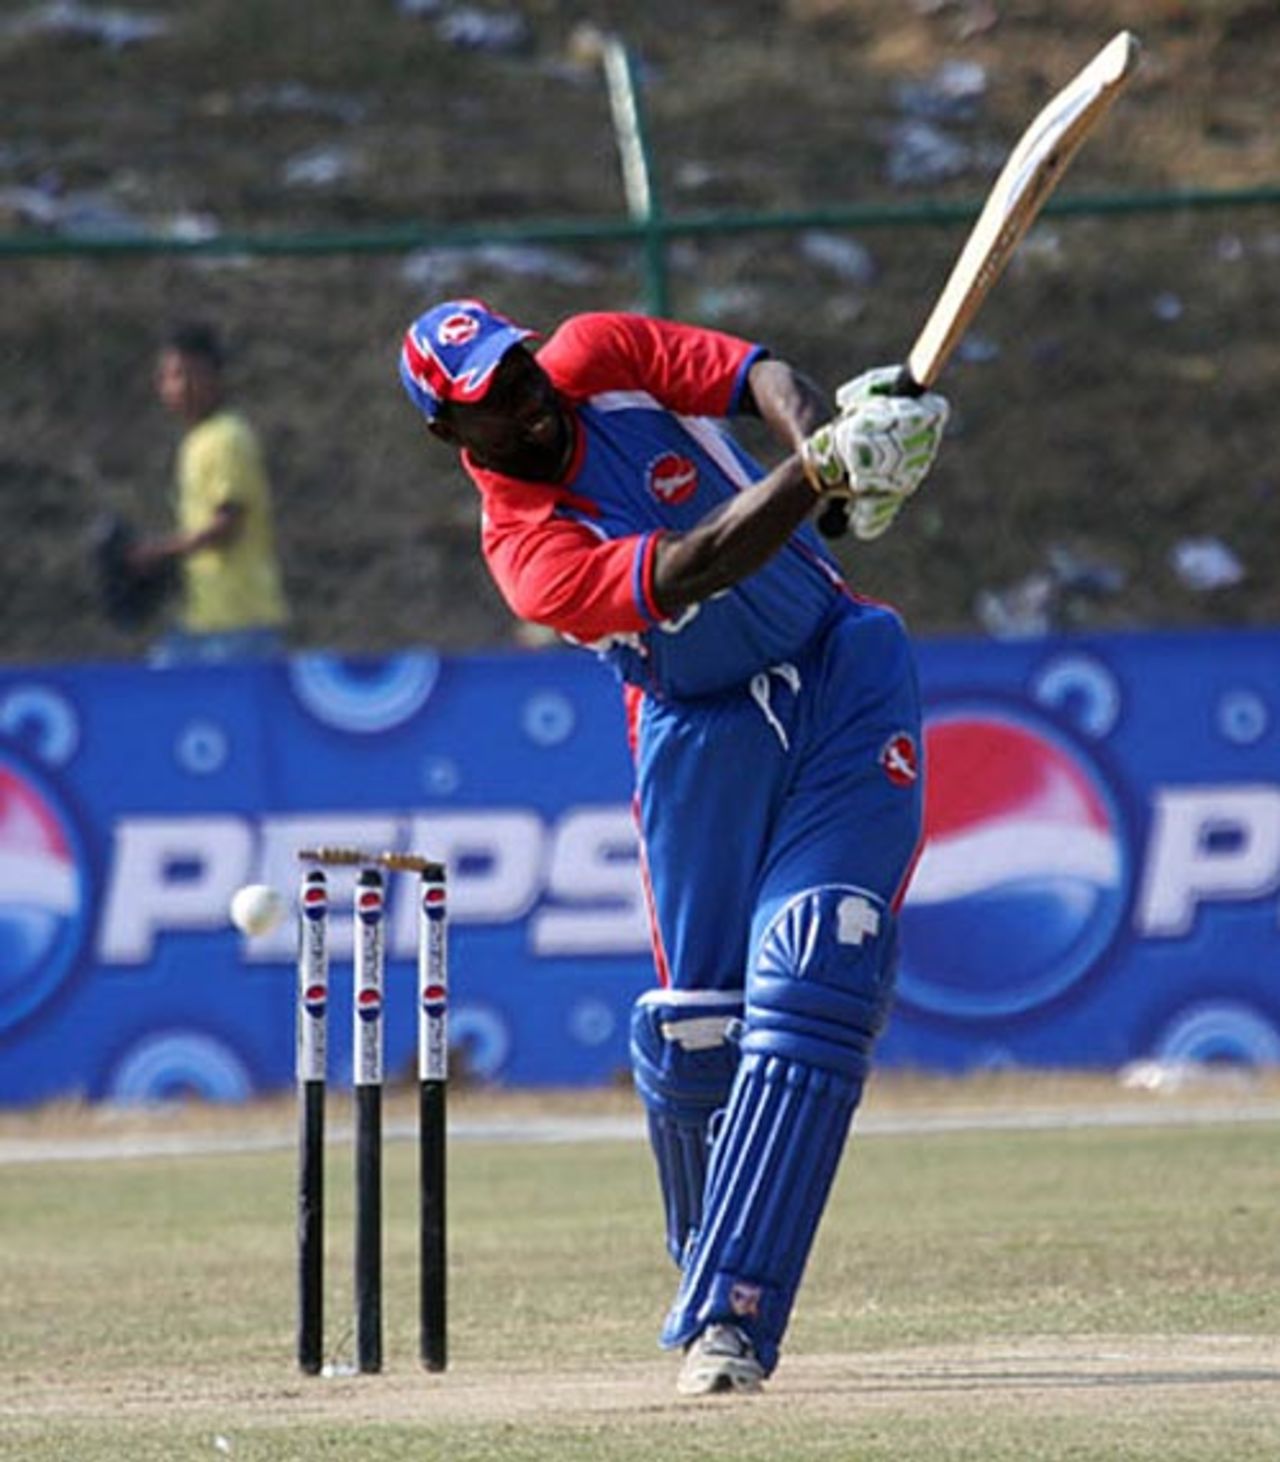 Lennox Cush is bowled, Nepal v USA, ICC World Cricket League Division 5 final, February 27, 2010